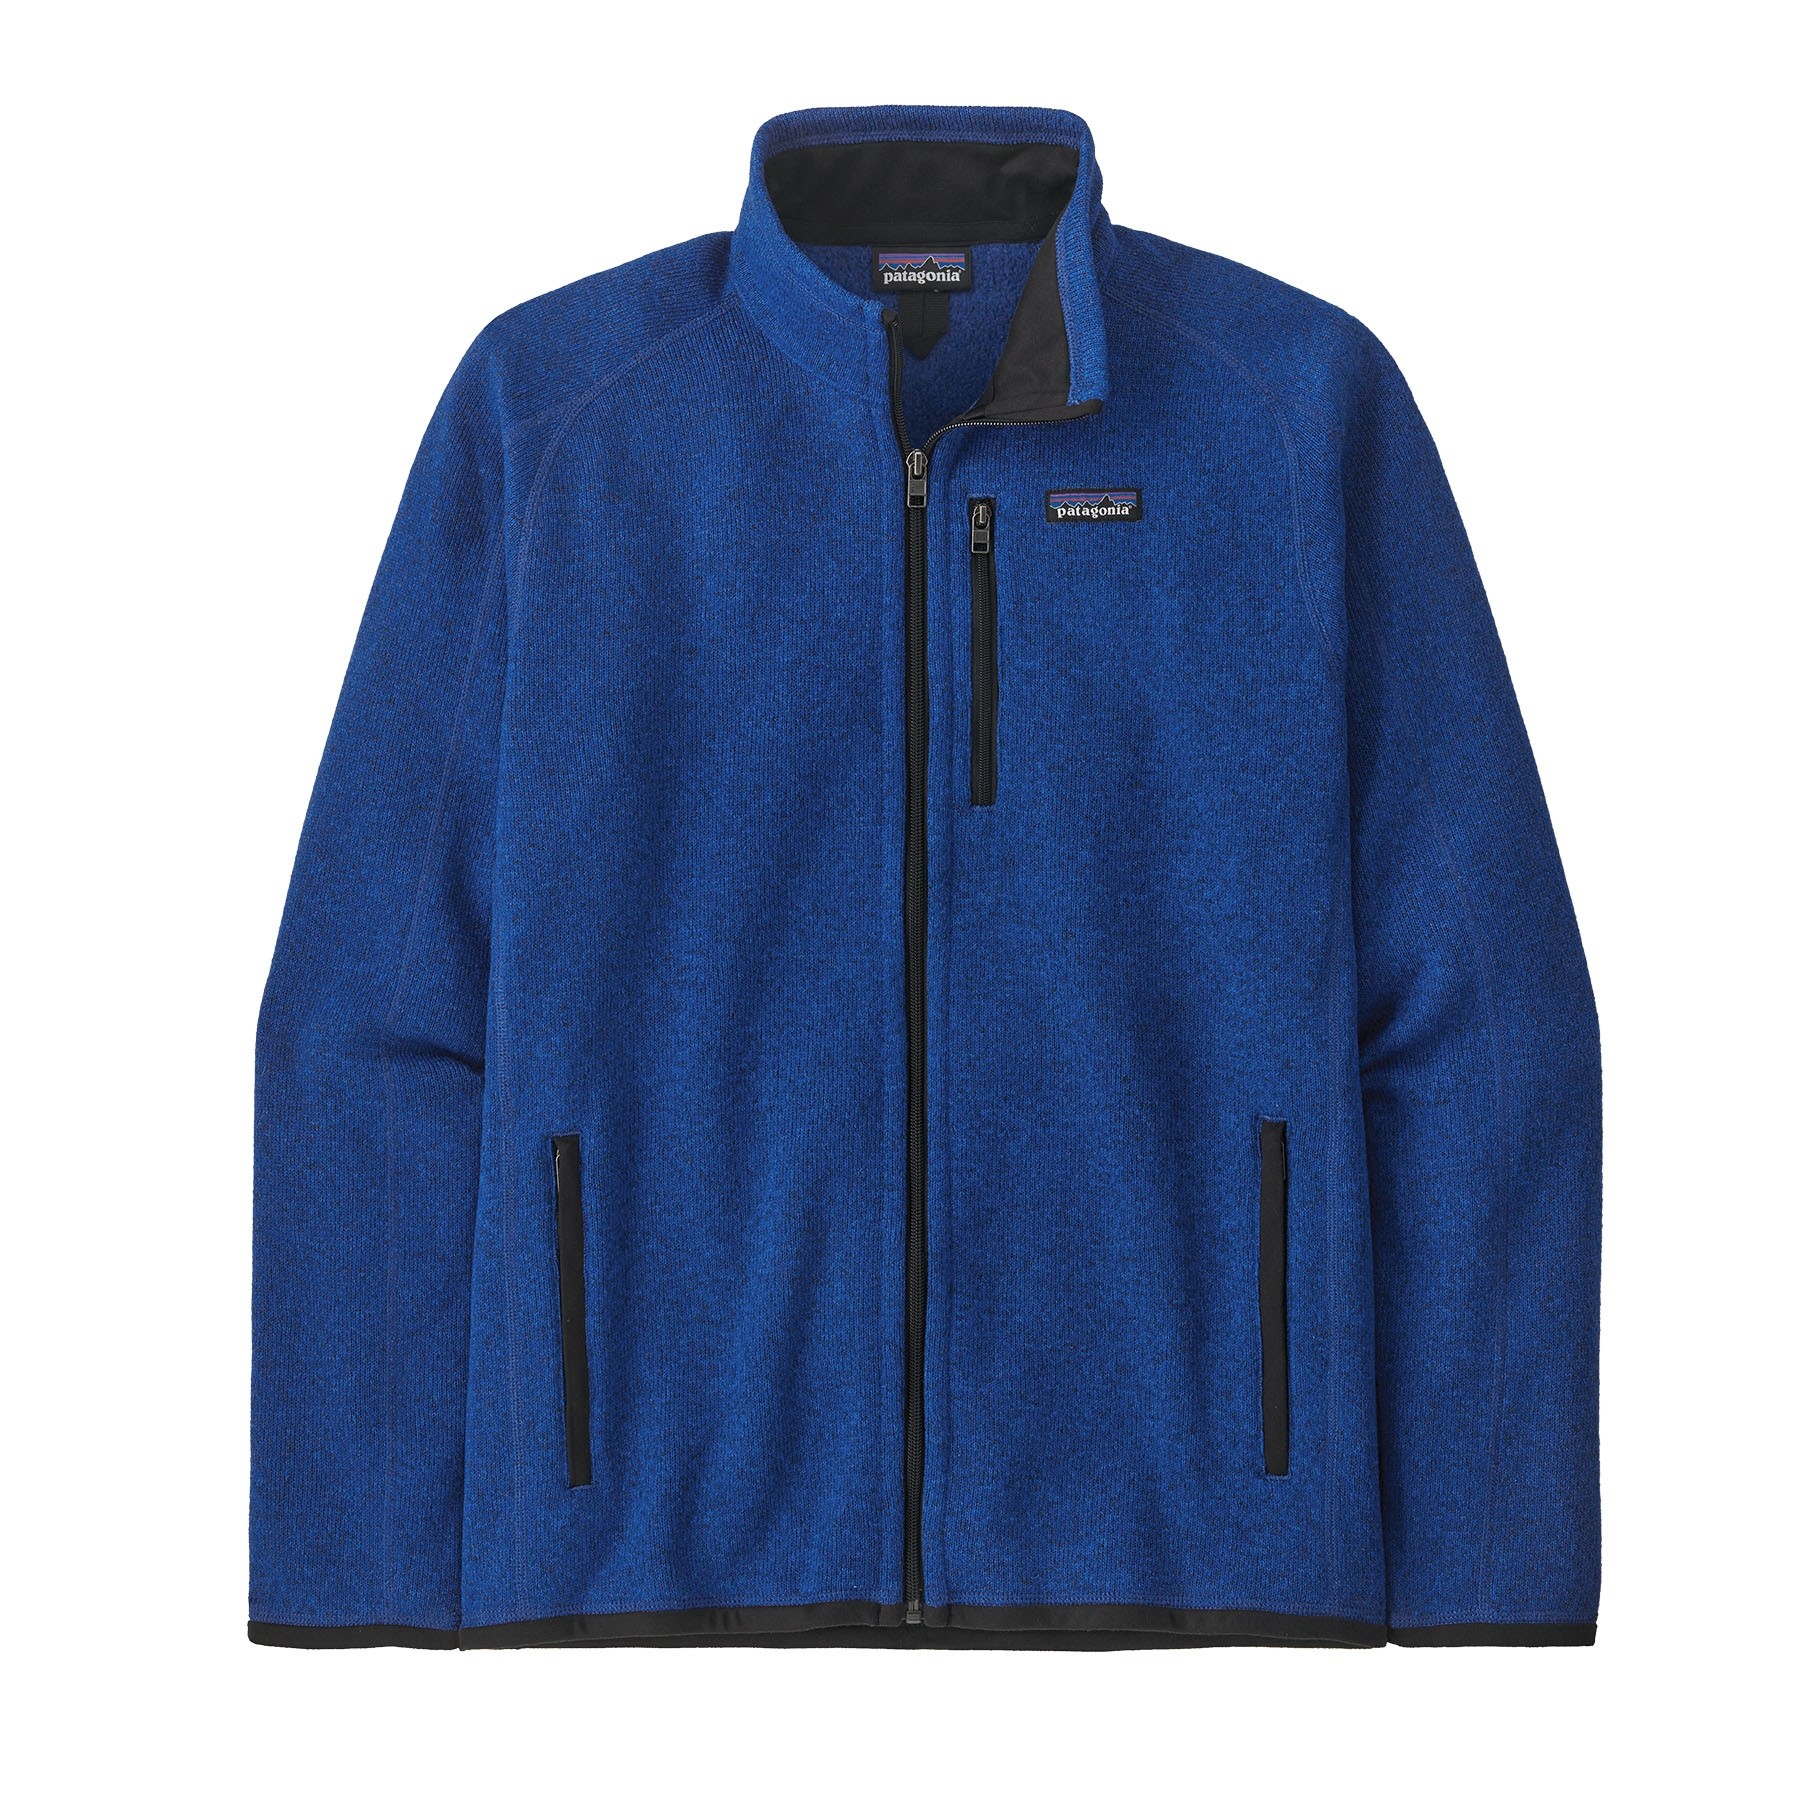 Patagonia Men's Better Sweater Fleece Jacket : Passage Blue 